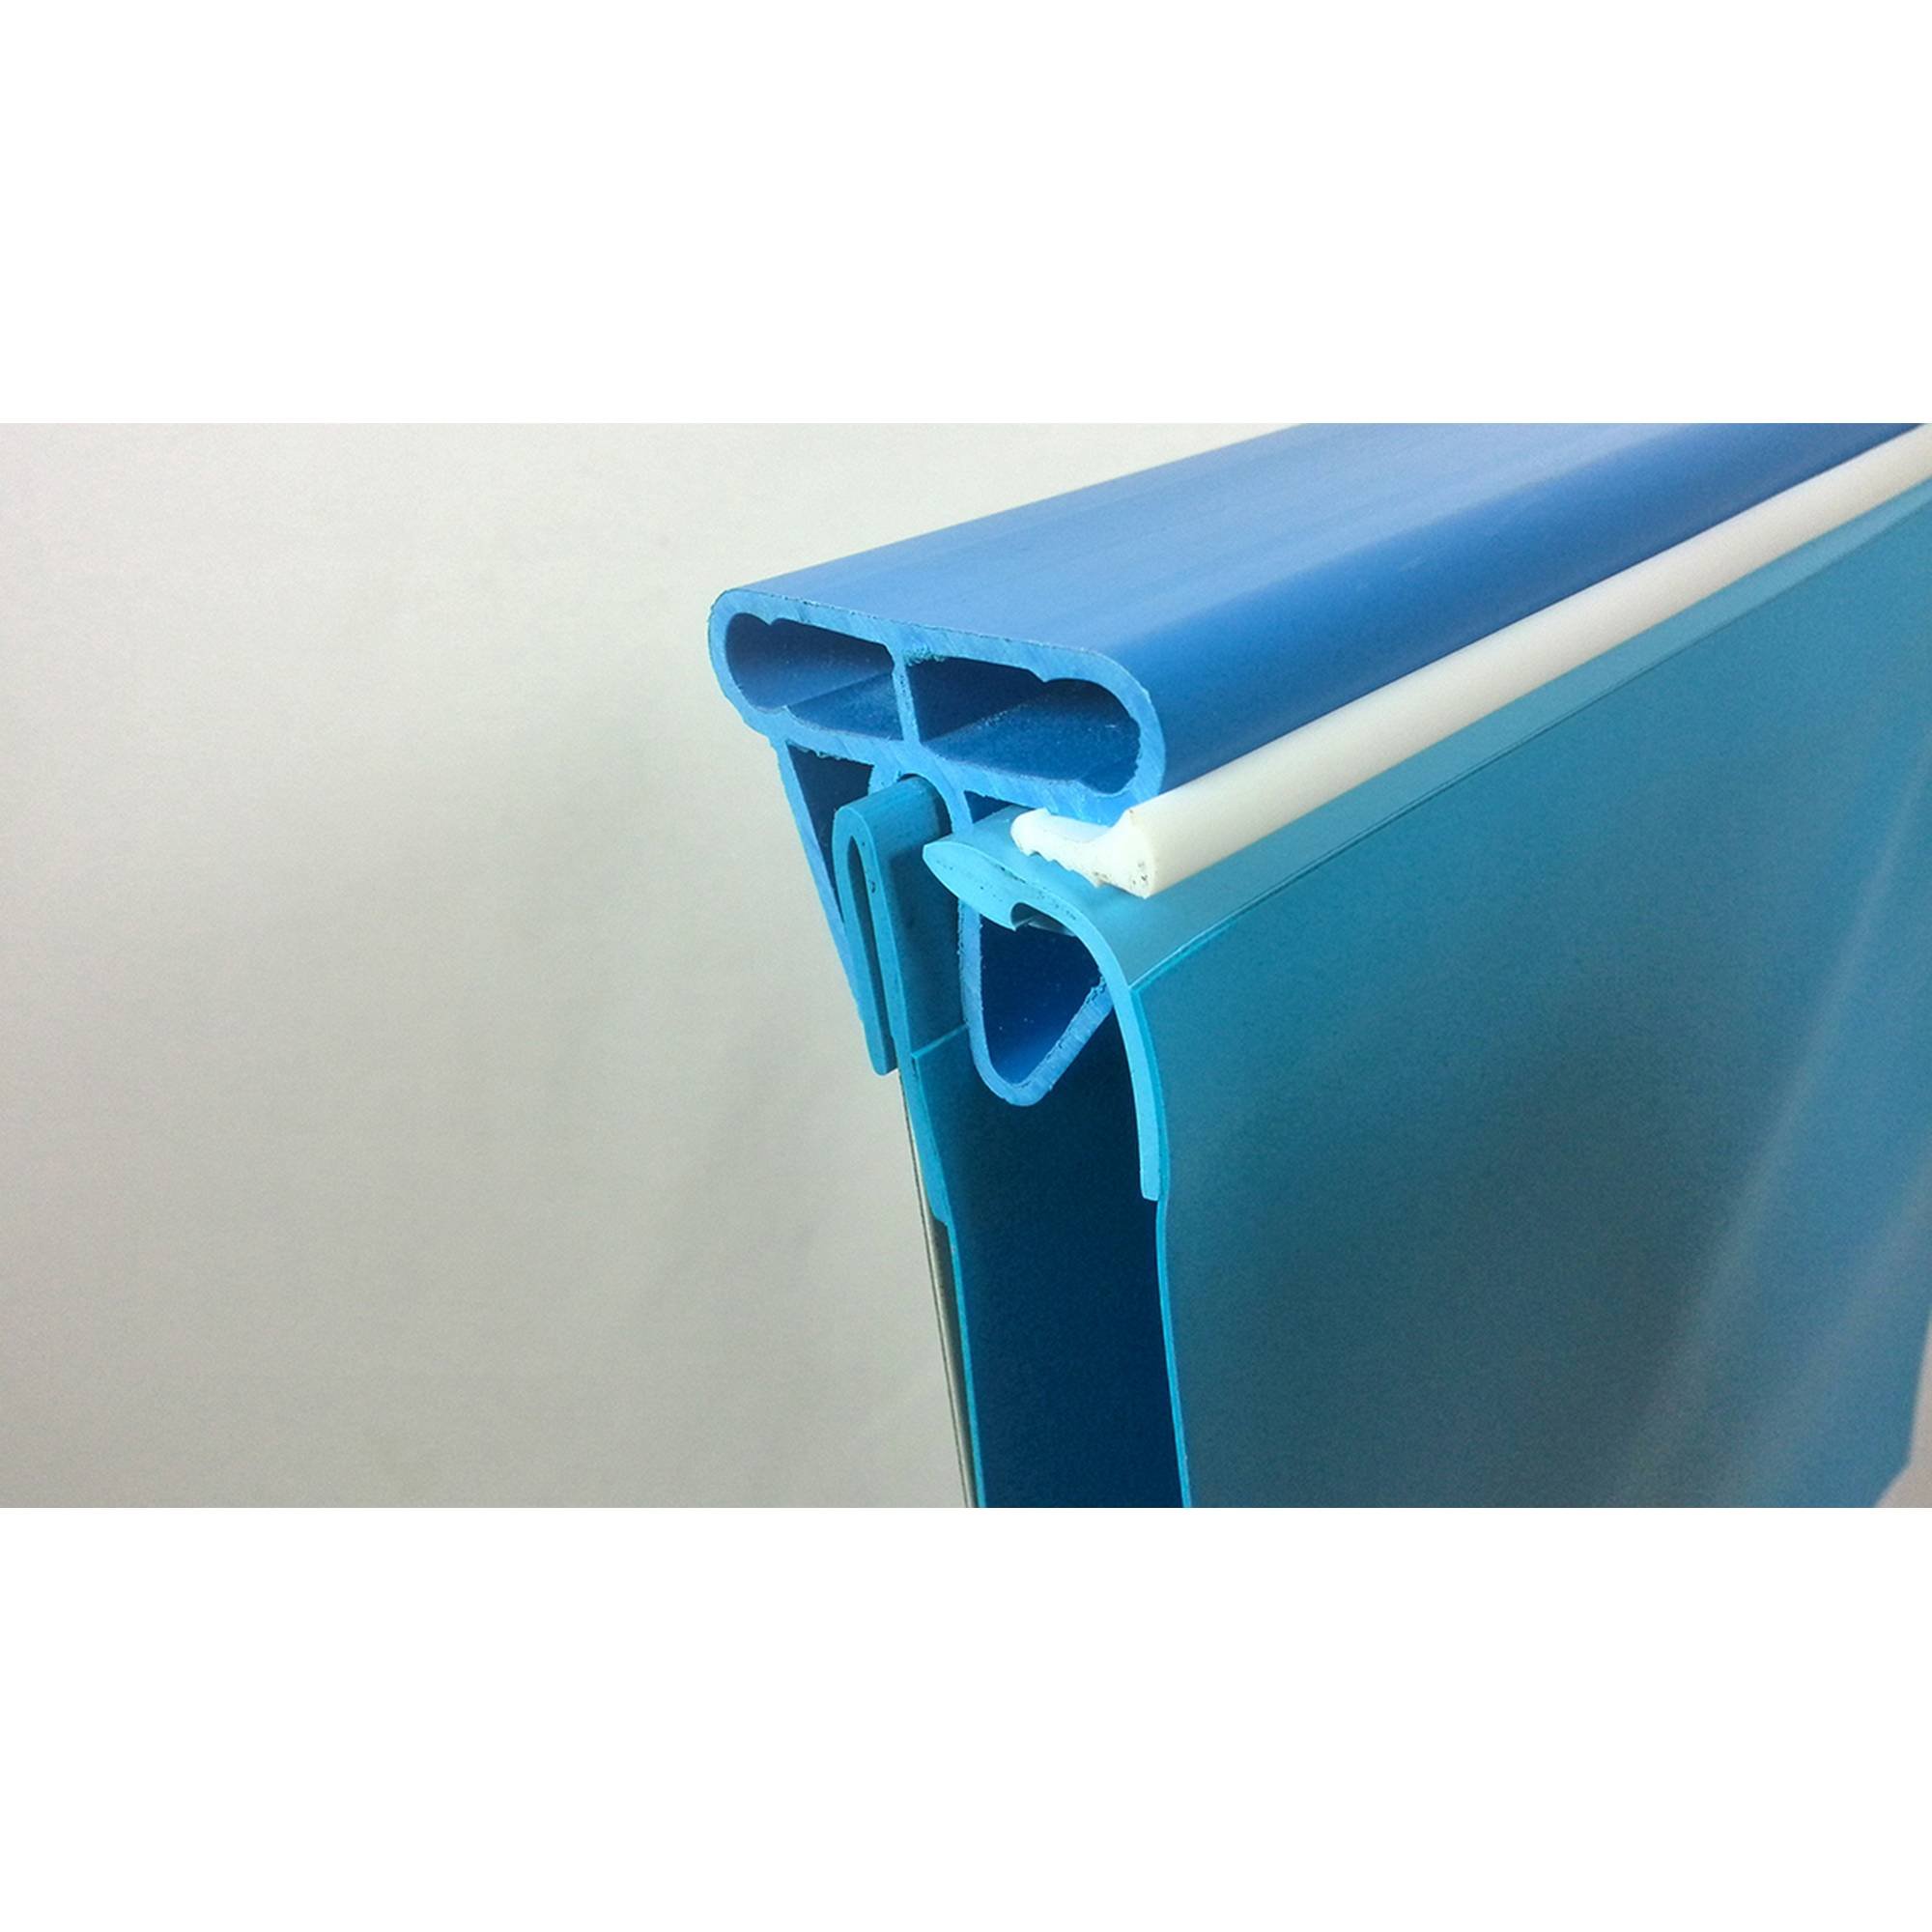 Stahlwandpool oval Exklusiv 525x320x120 cm, Stahl 0,6 mm weiß, Folie 0,6 mm blau, Einhängebiese